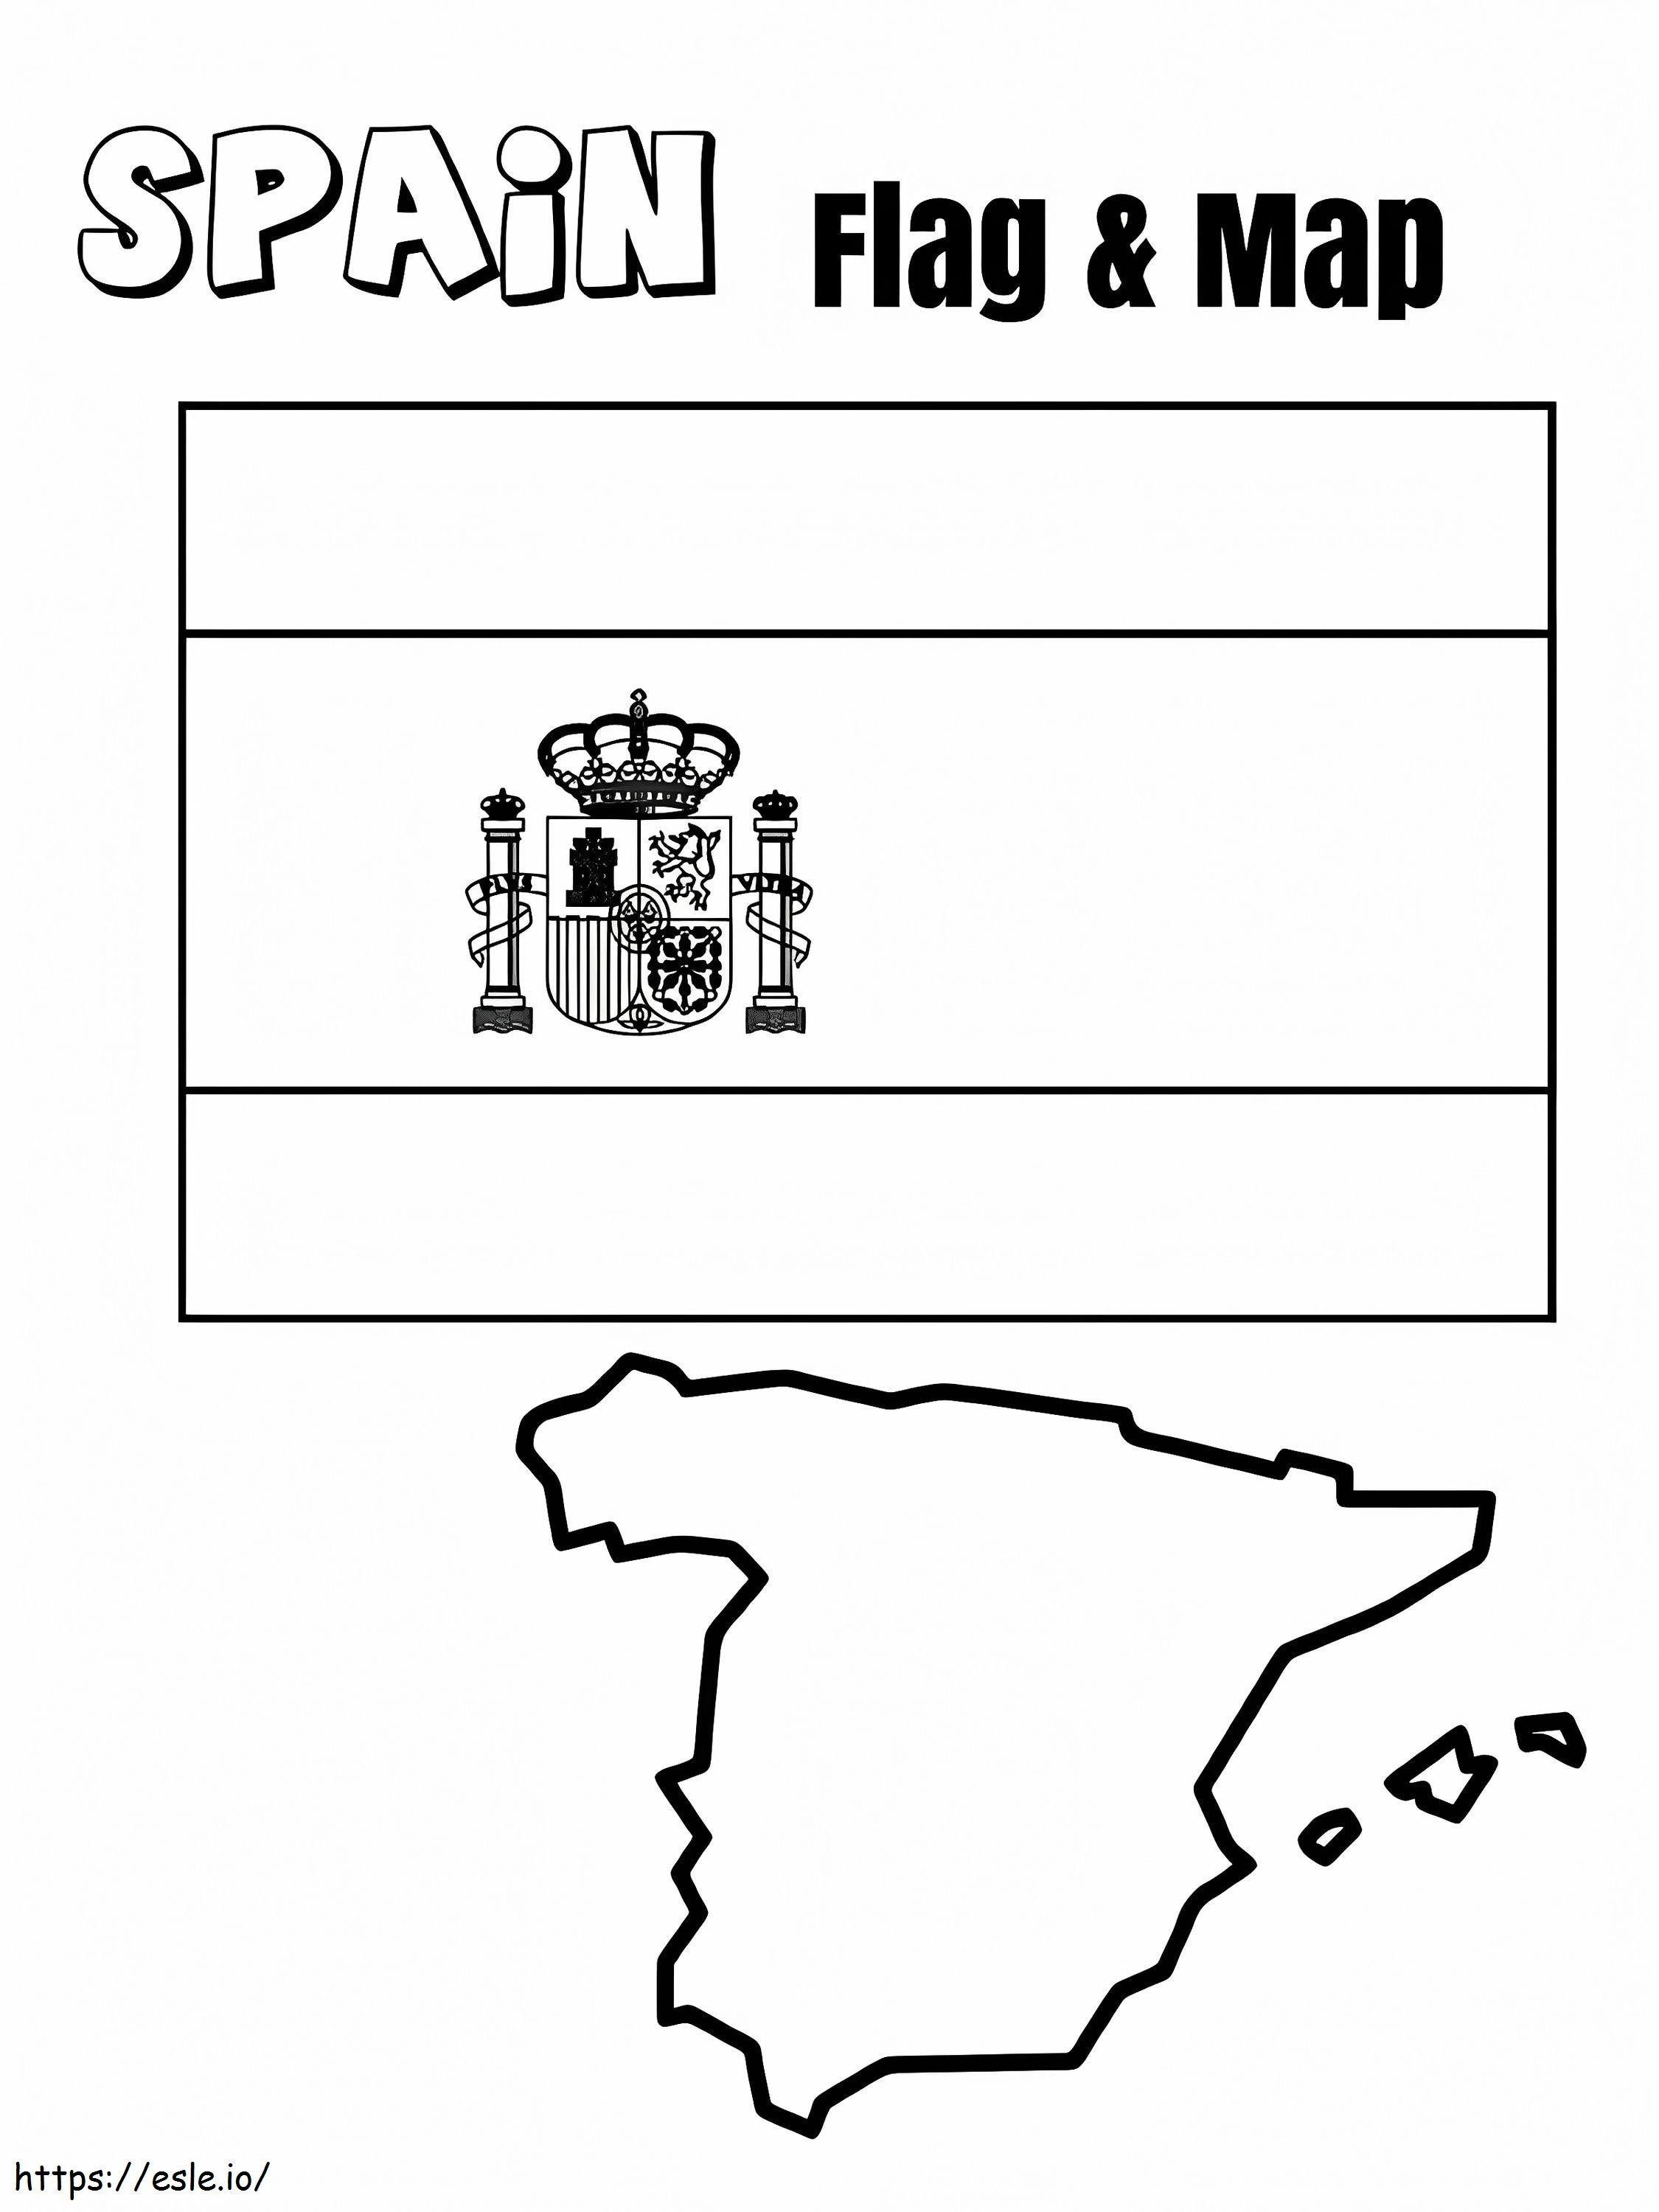 Bandeira e mapa da Espanha para colorir